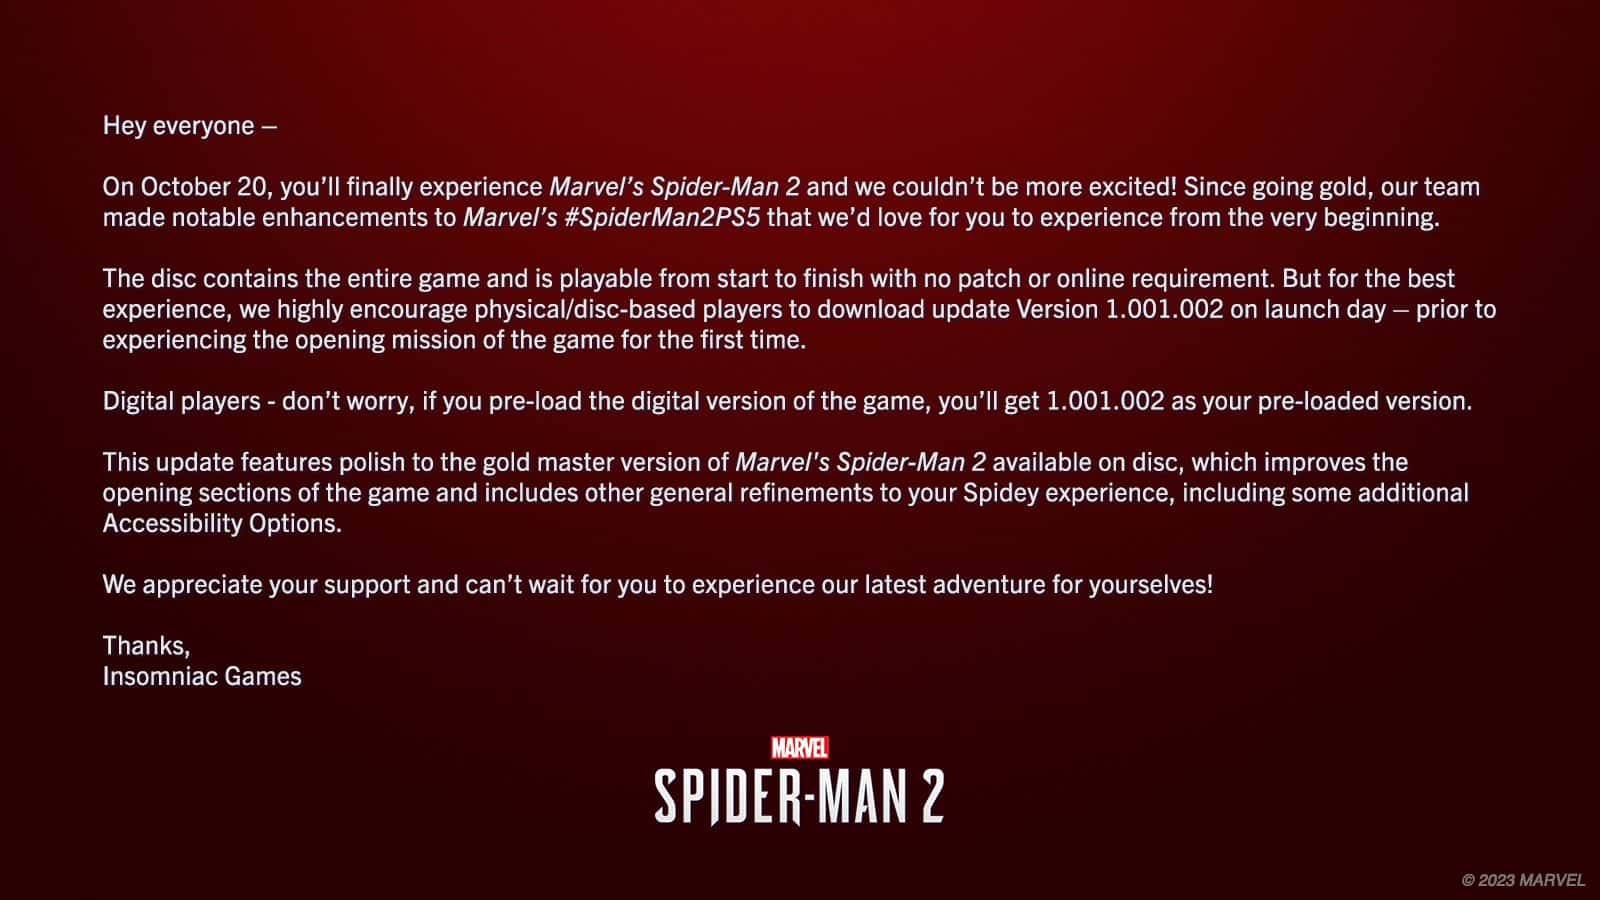 The Spider-Man 2 trailer is shown.